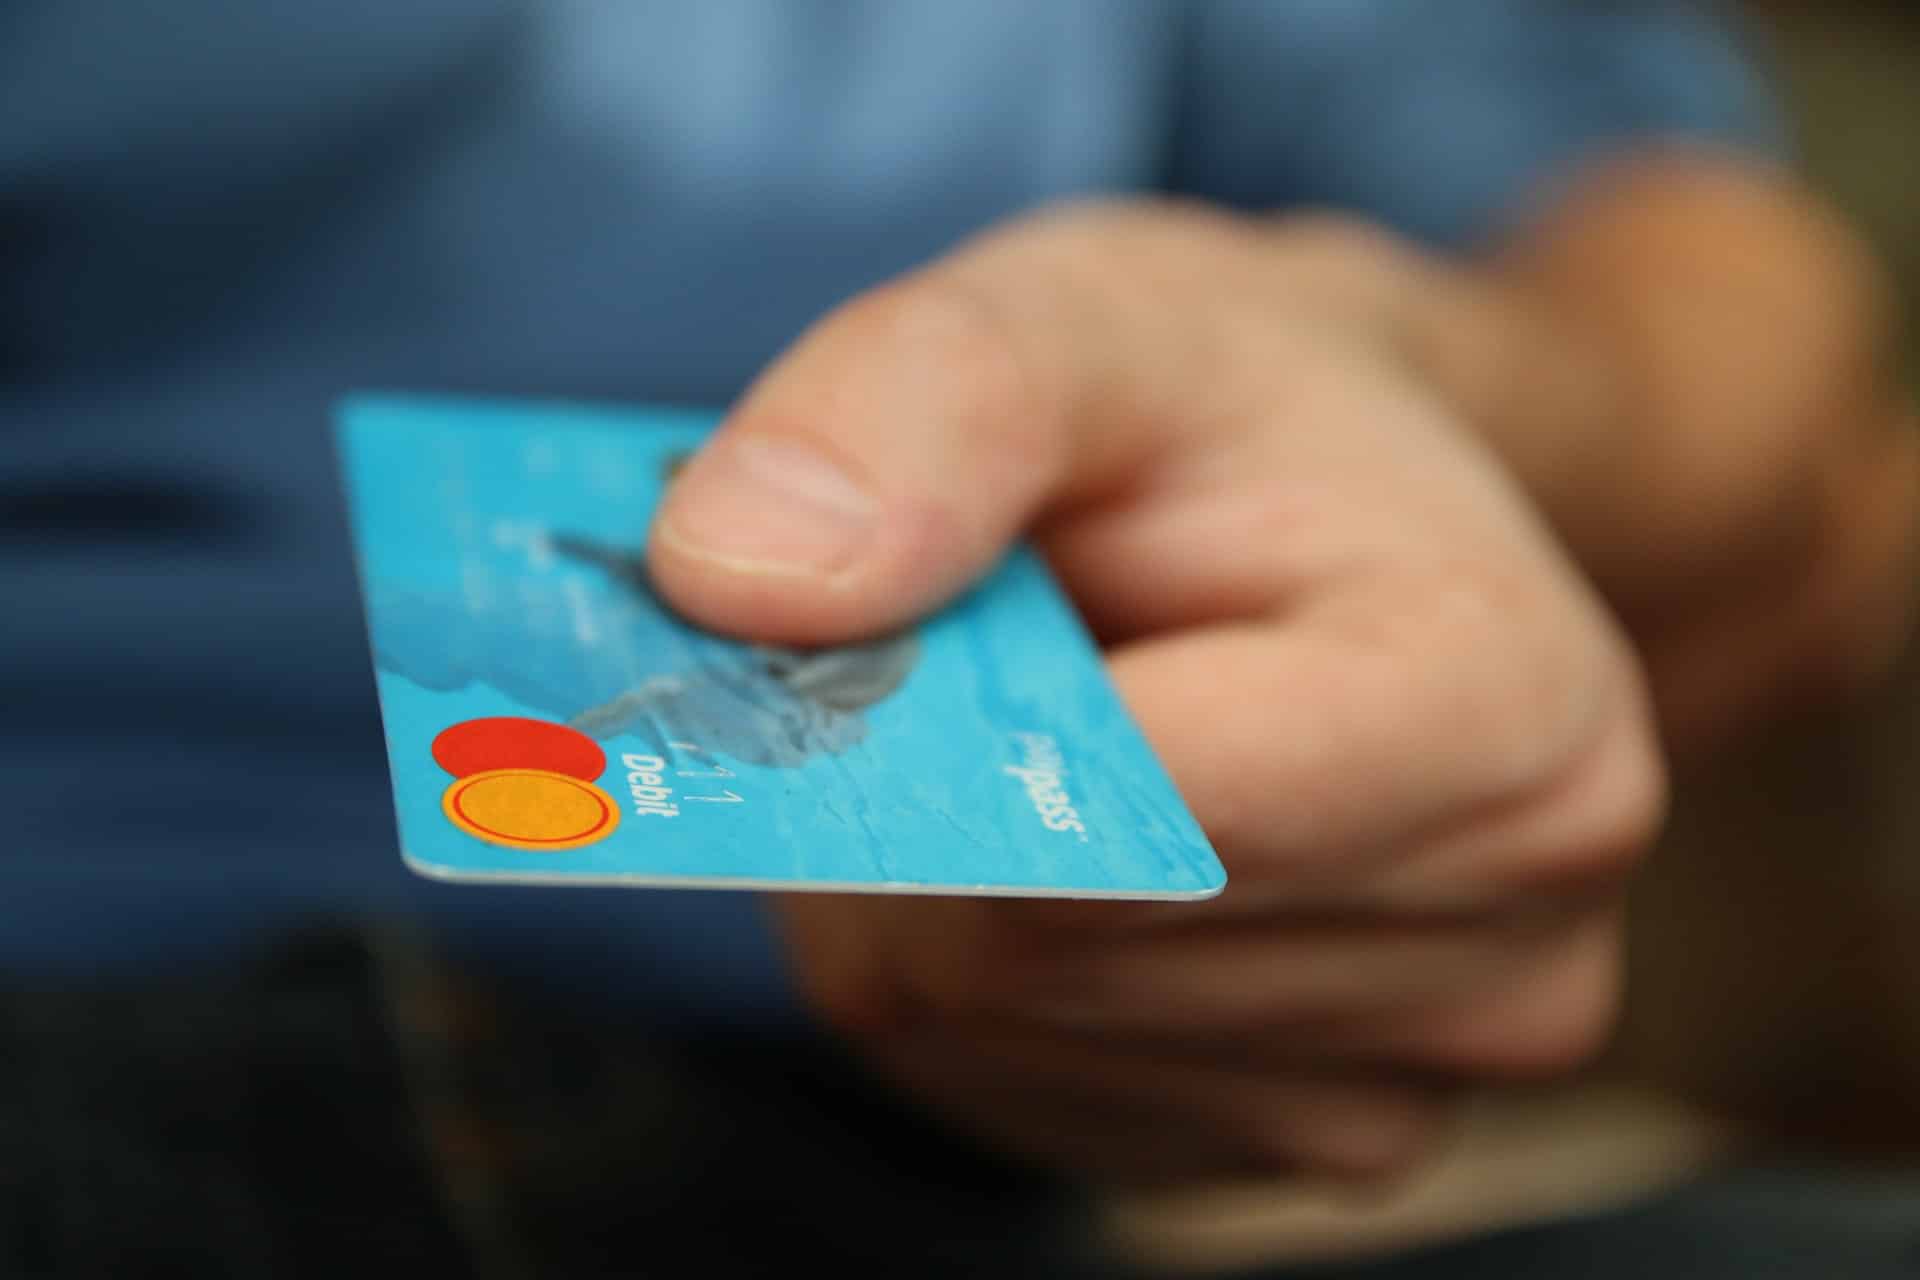 5 drivers transactions - man handing credit card